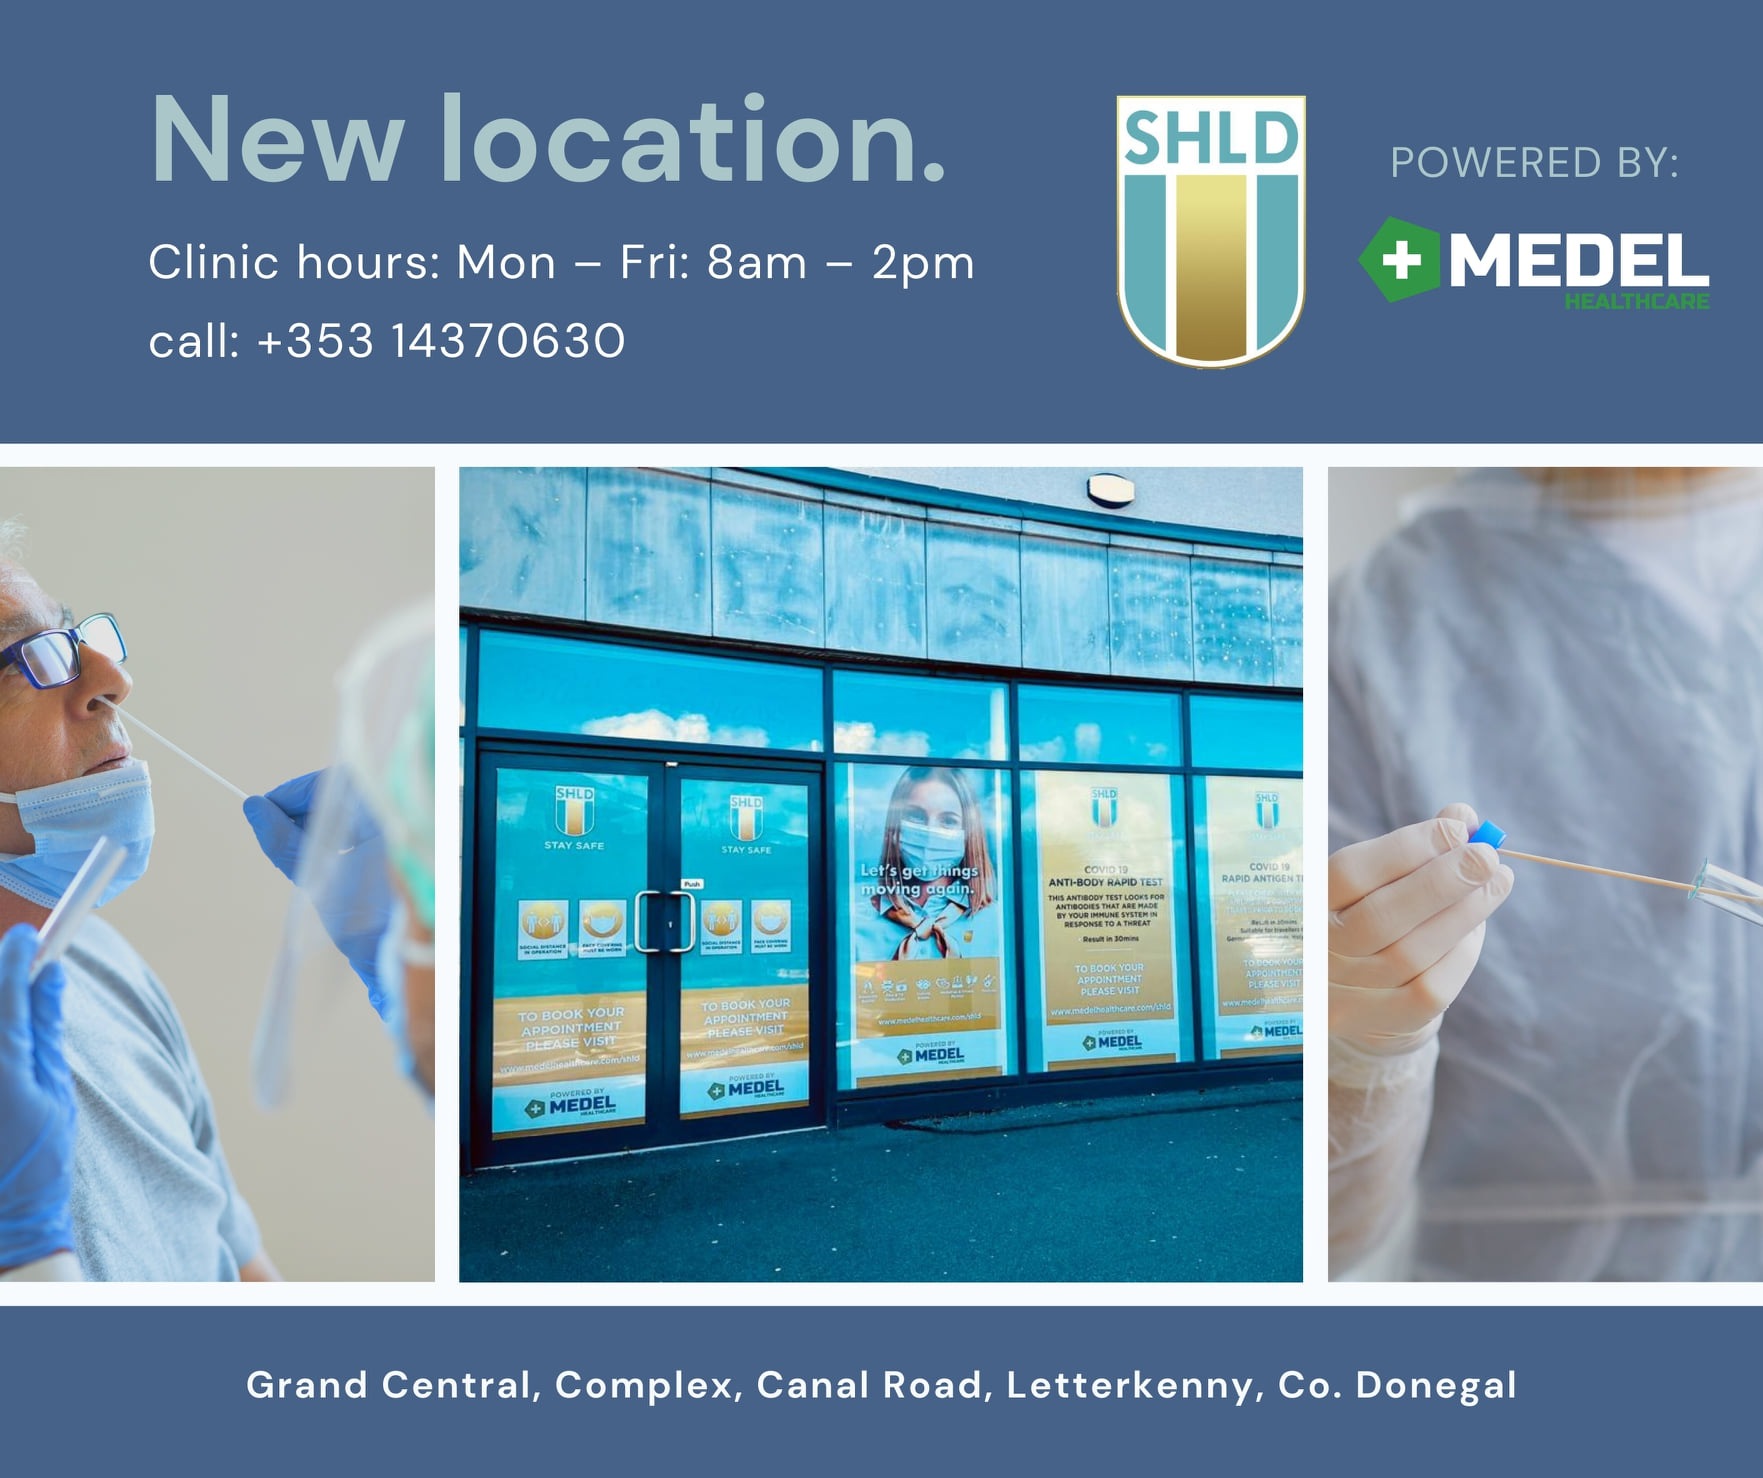 Medel Healthcare power new Covid Testing Clinic in Letterkenny